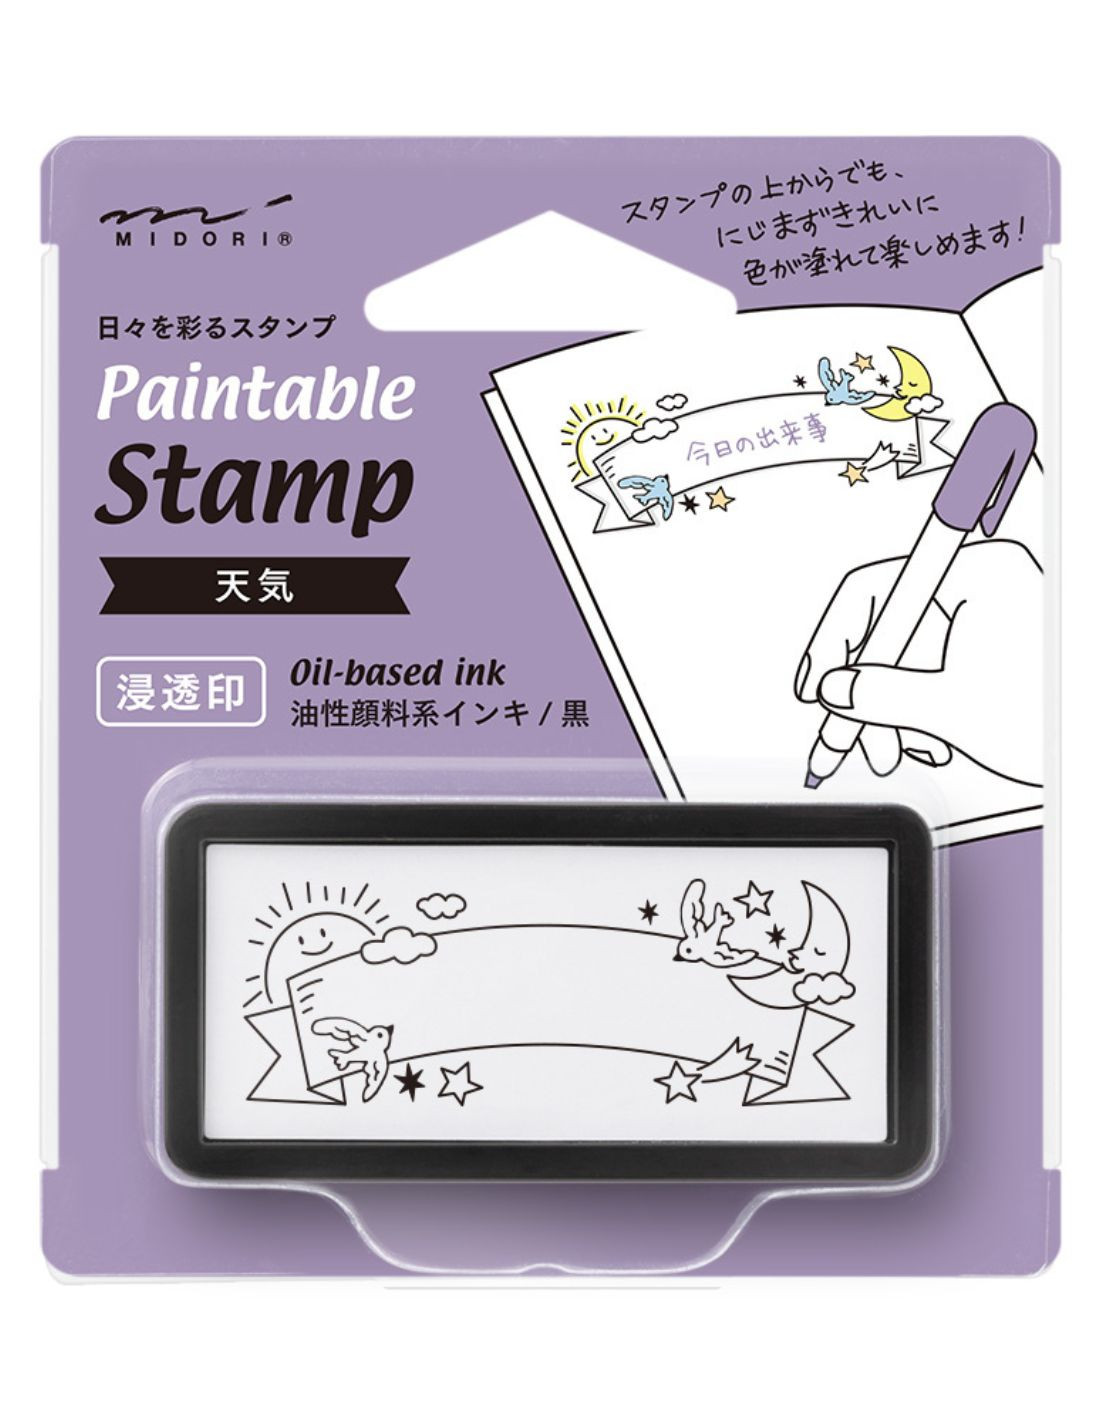 Tampon pré-encré Paintable Stamp - Météo - Midori